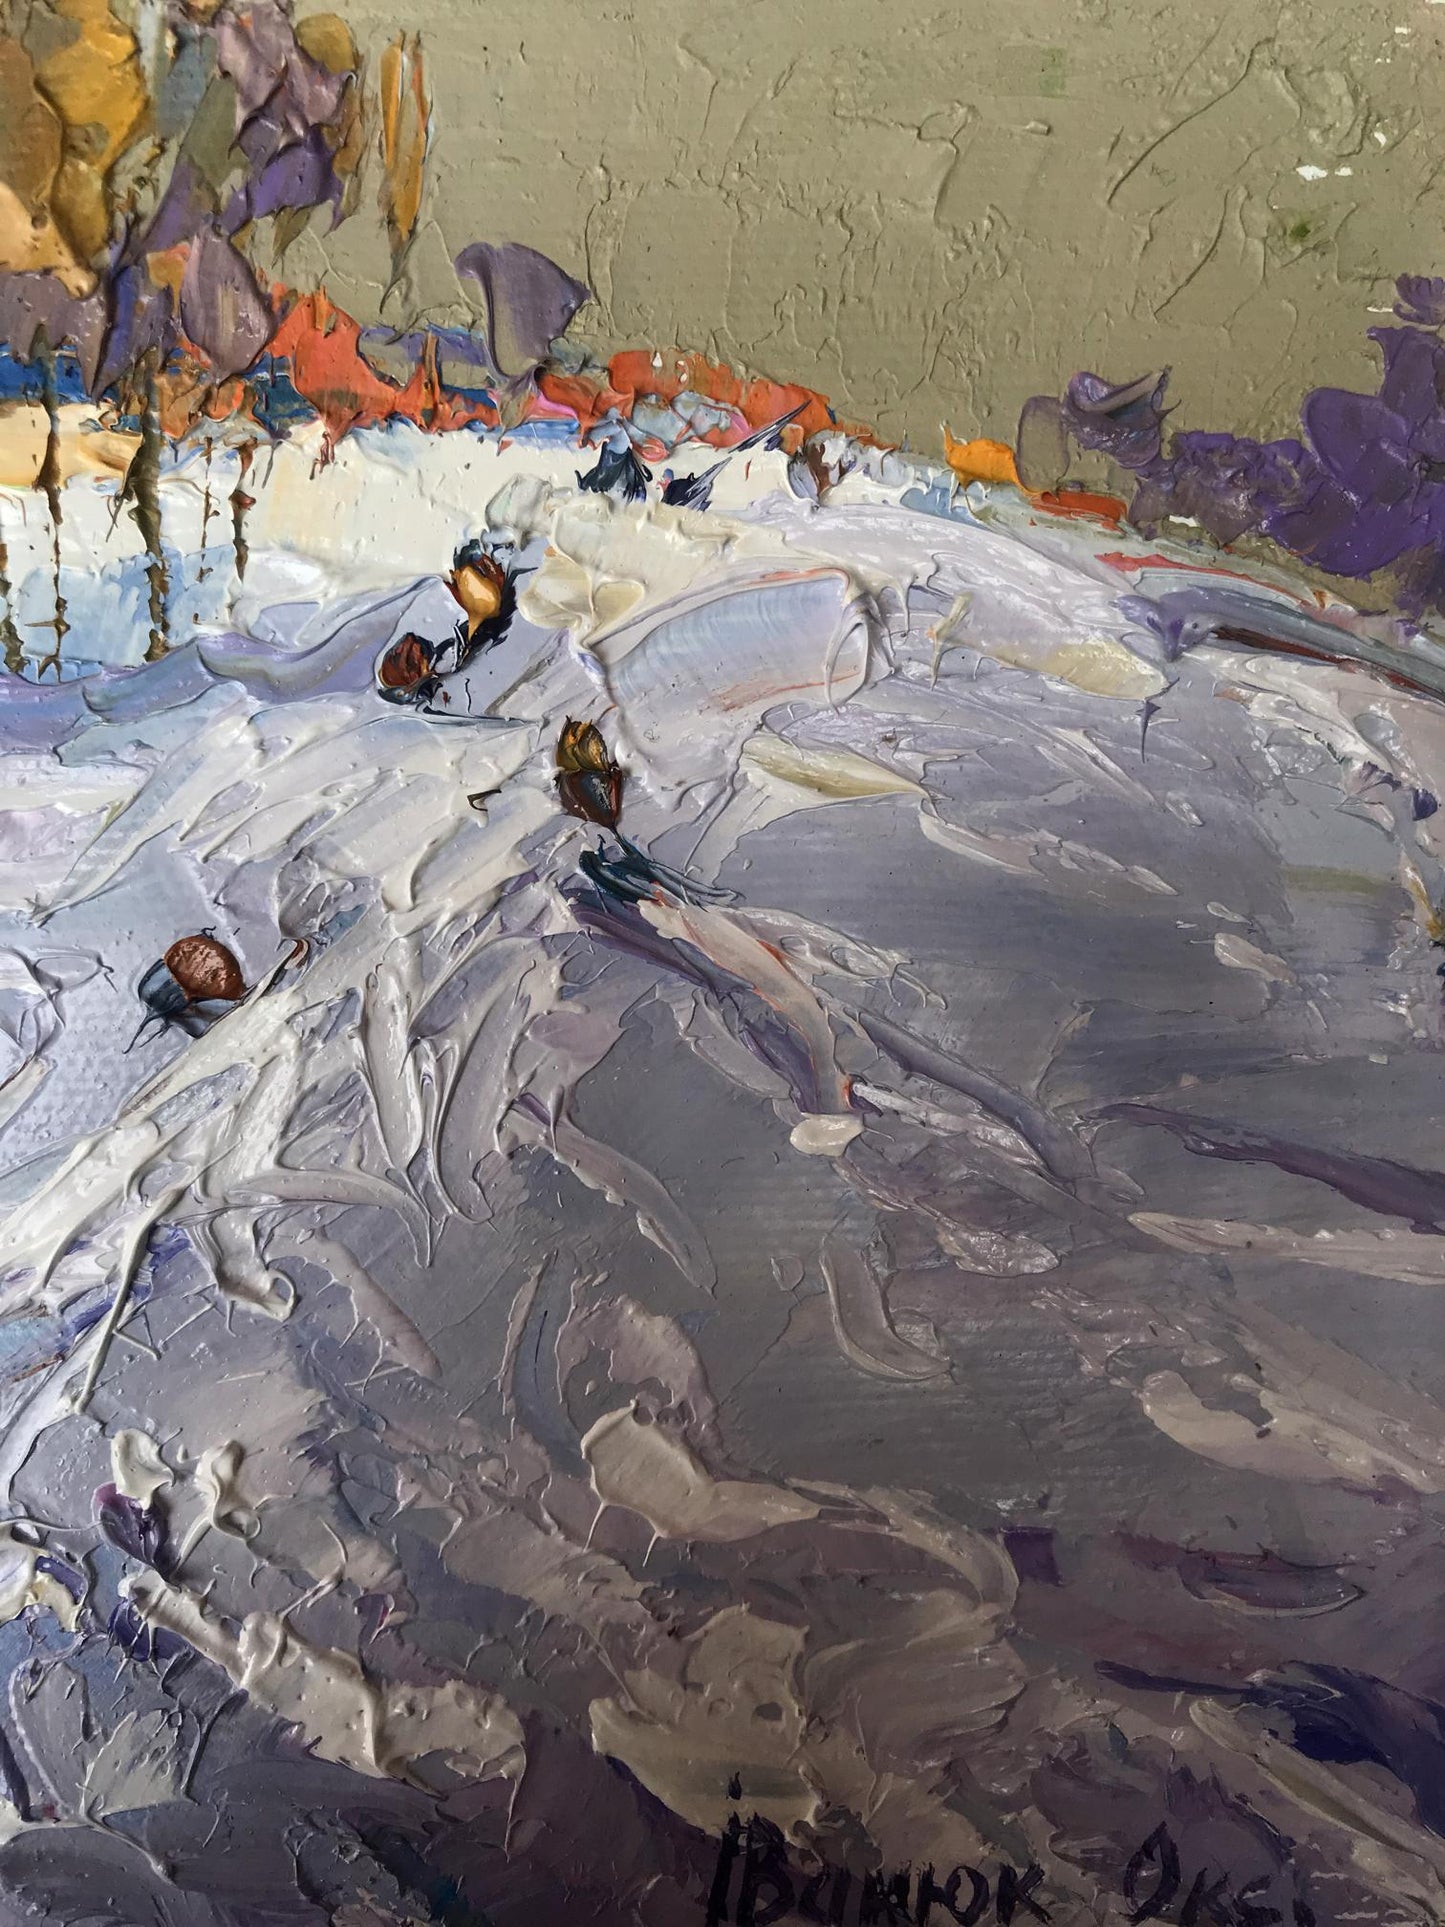 Tranquil Snowscape: Oksana Ivanyuk's Oil Masterpiece of Snowy Hills